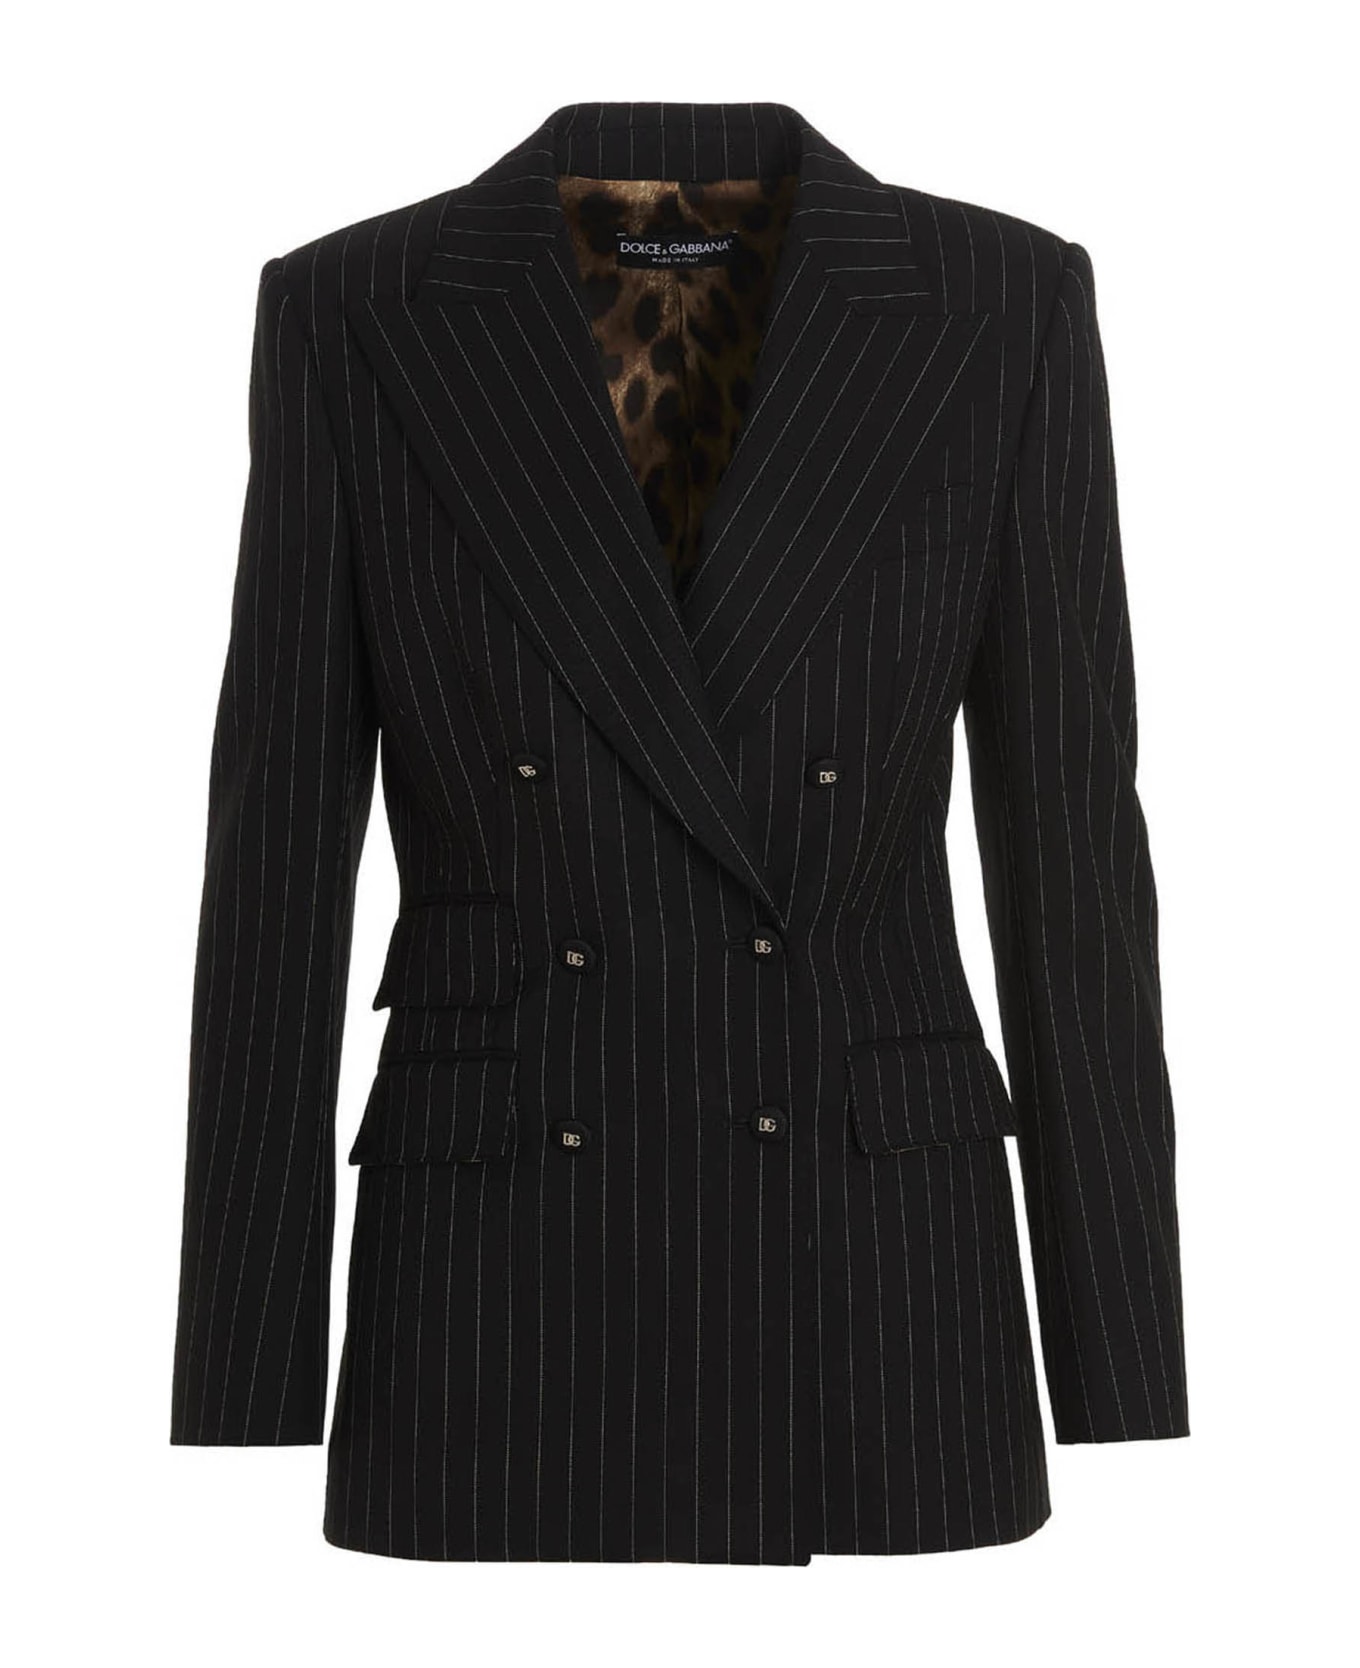 Dolce & Gabbana Pinstripe Blazer Jacket - White/Black